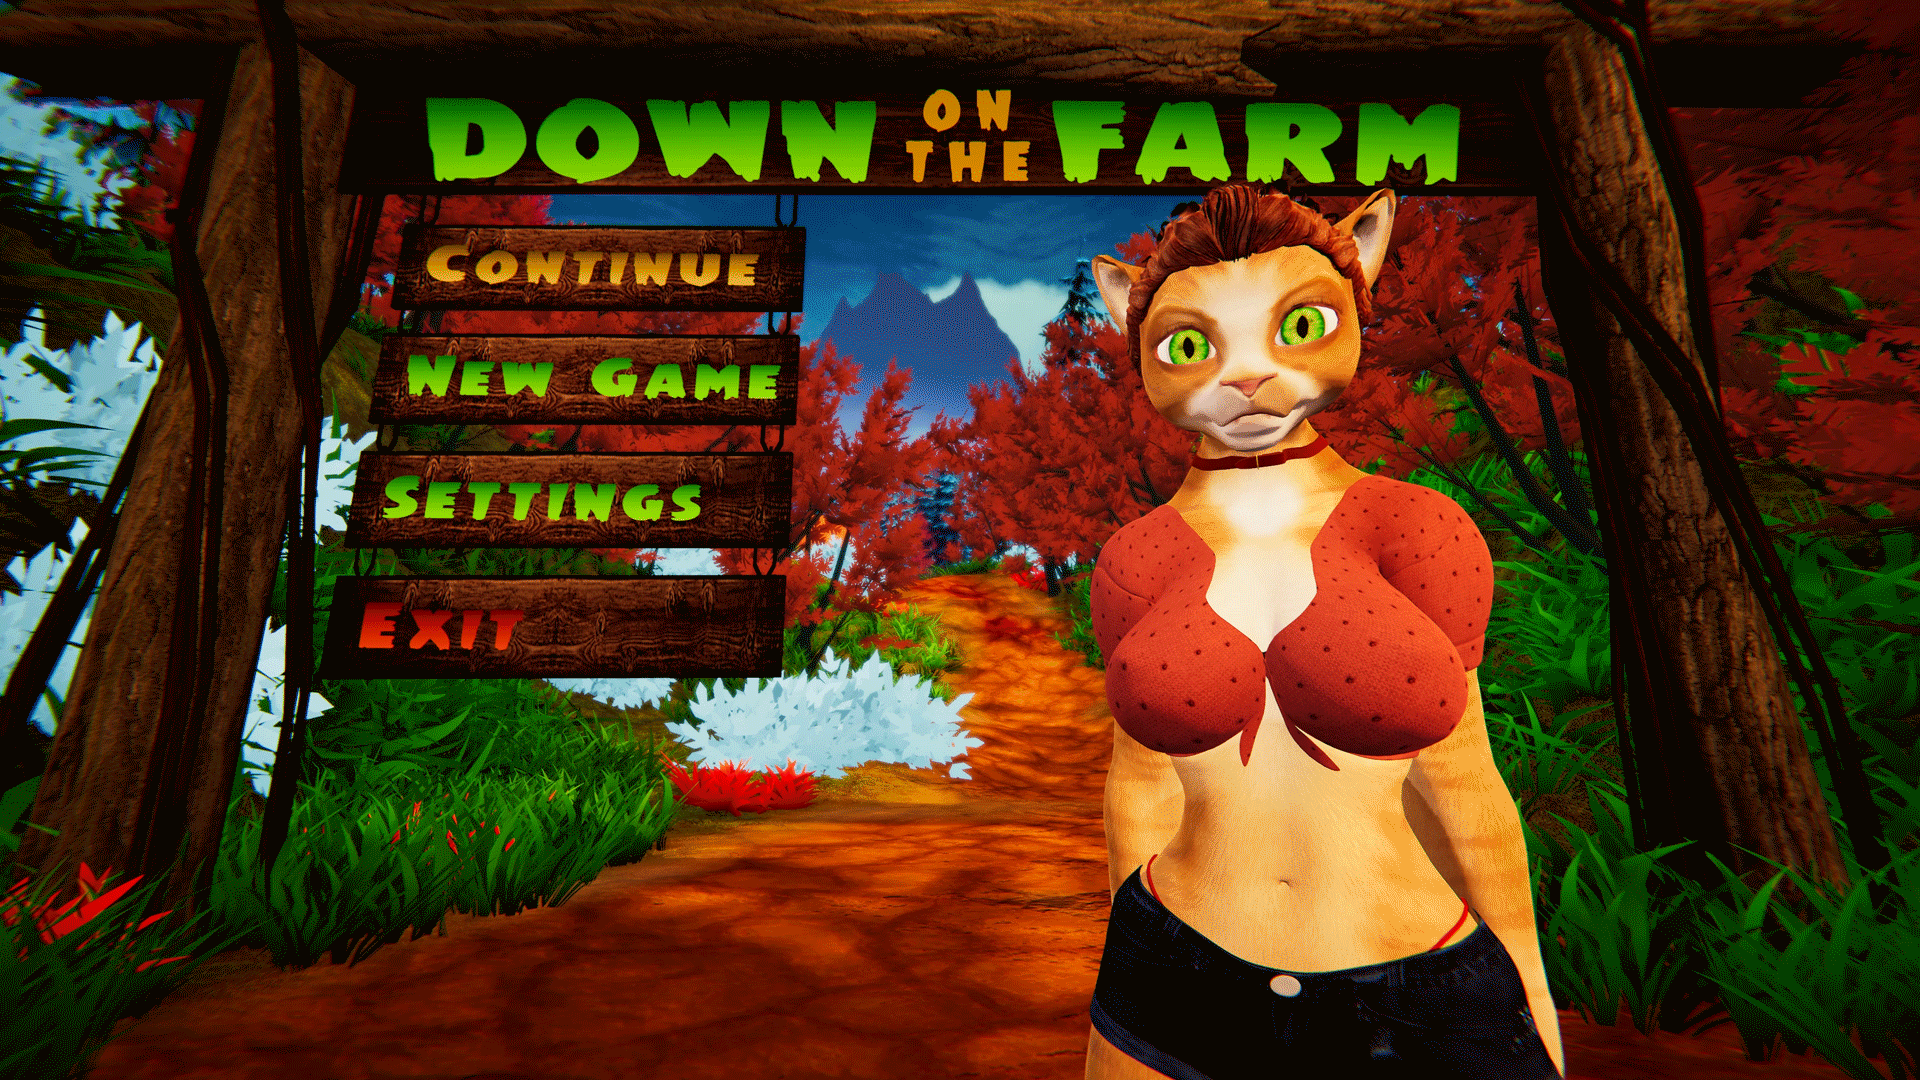 Down On The Farm v0.1 Demo - free game download, reviews, mega - xGames